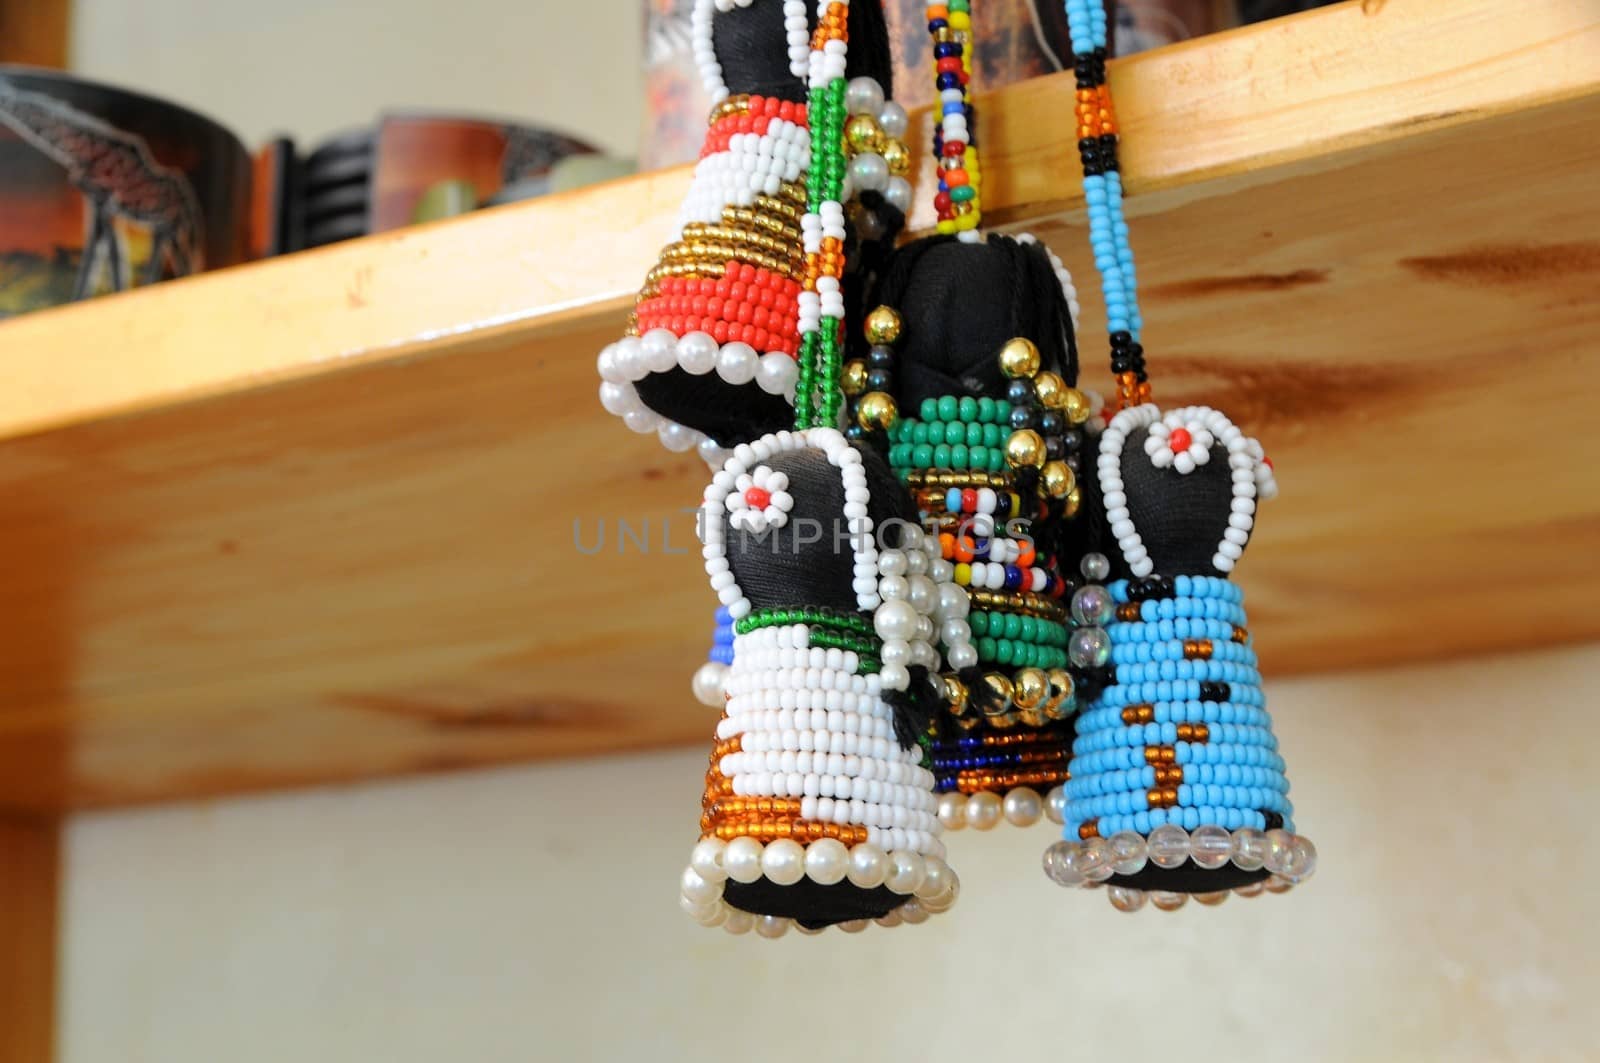 souvenir gift items from Tanzania by moizhusein